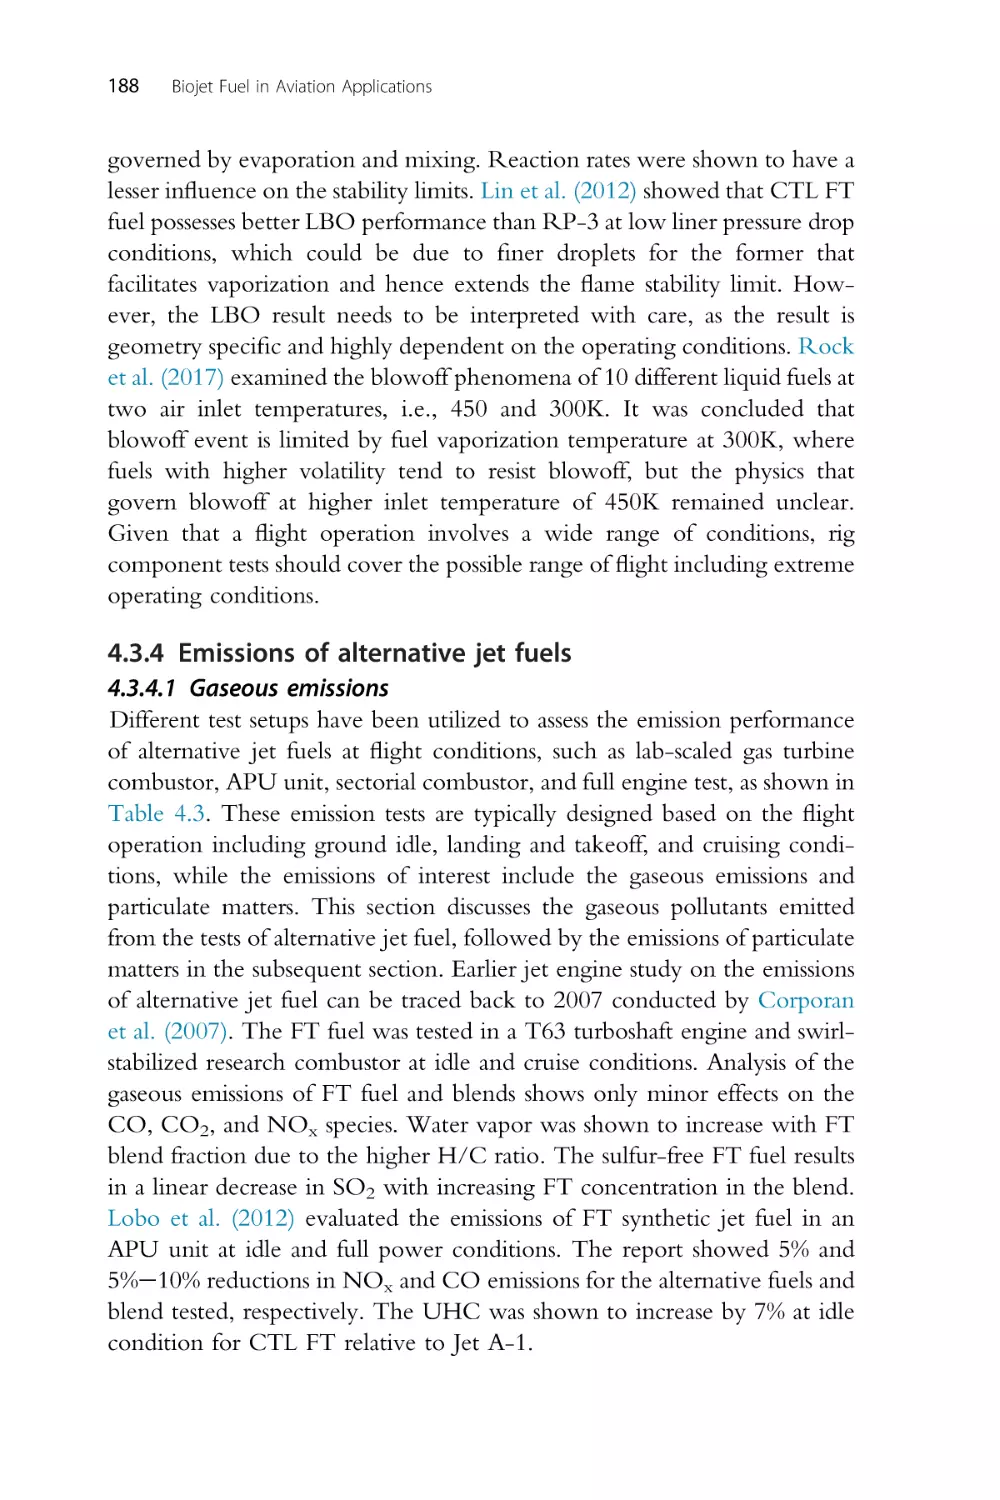 4.3.4 Emissions of alternative jet fuels
4.3.4.1 Gaseous emissions